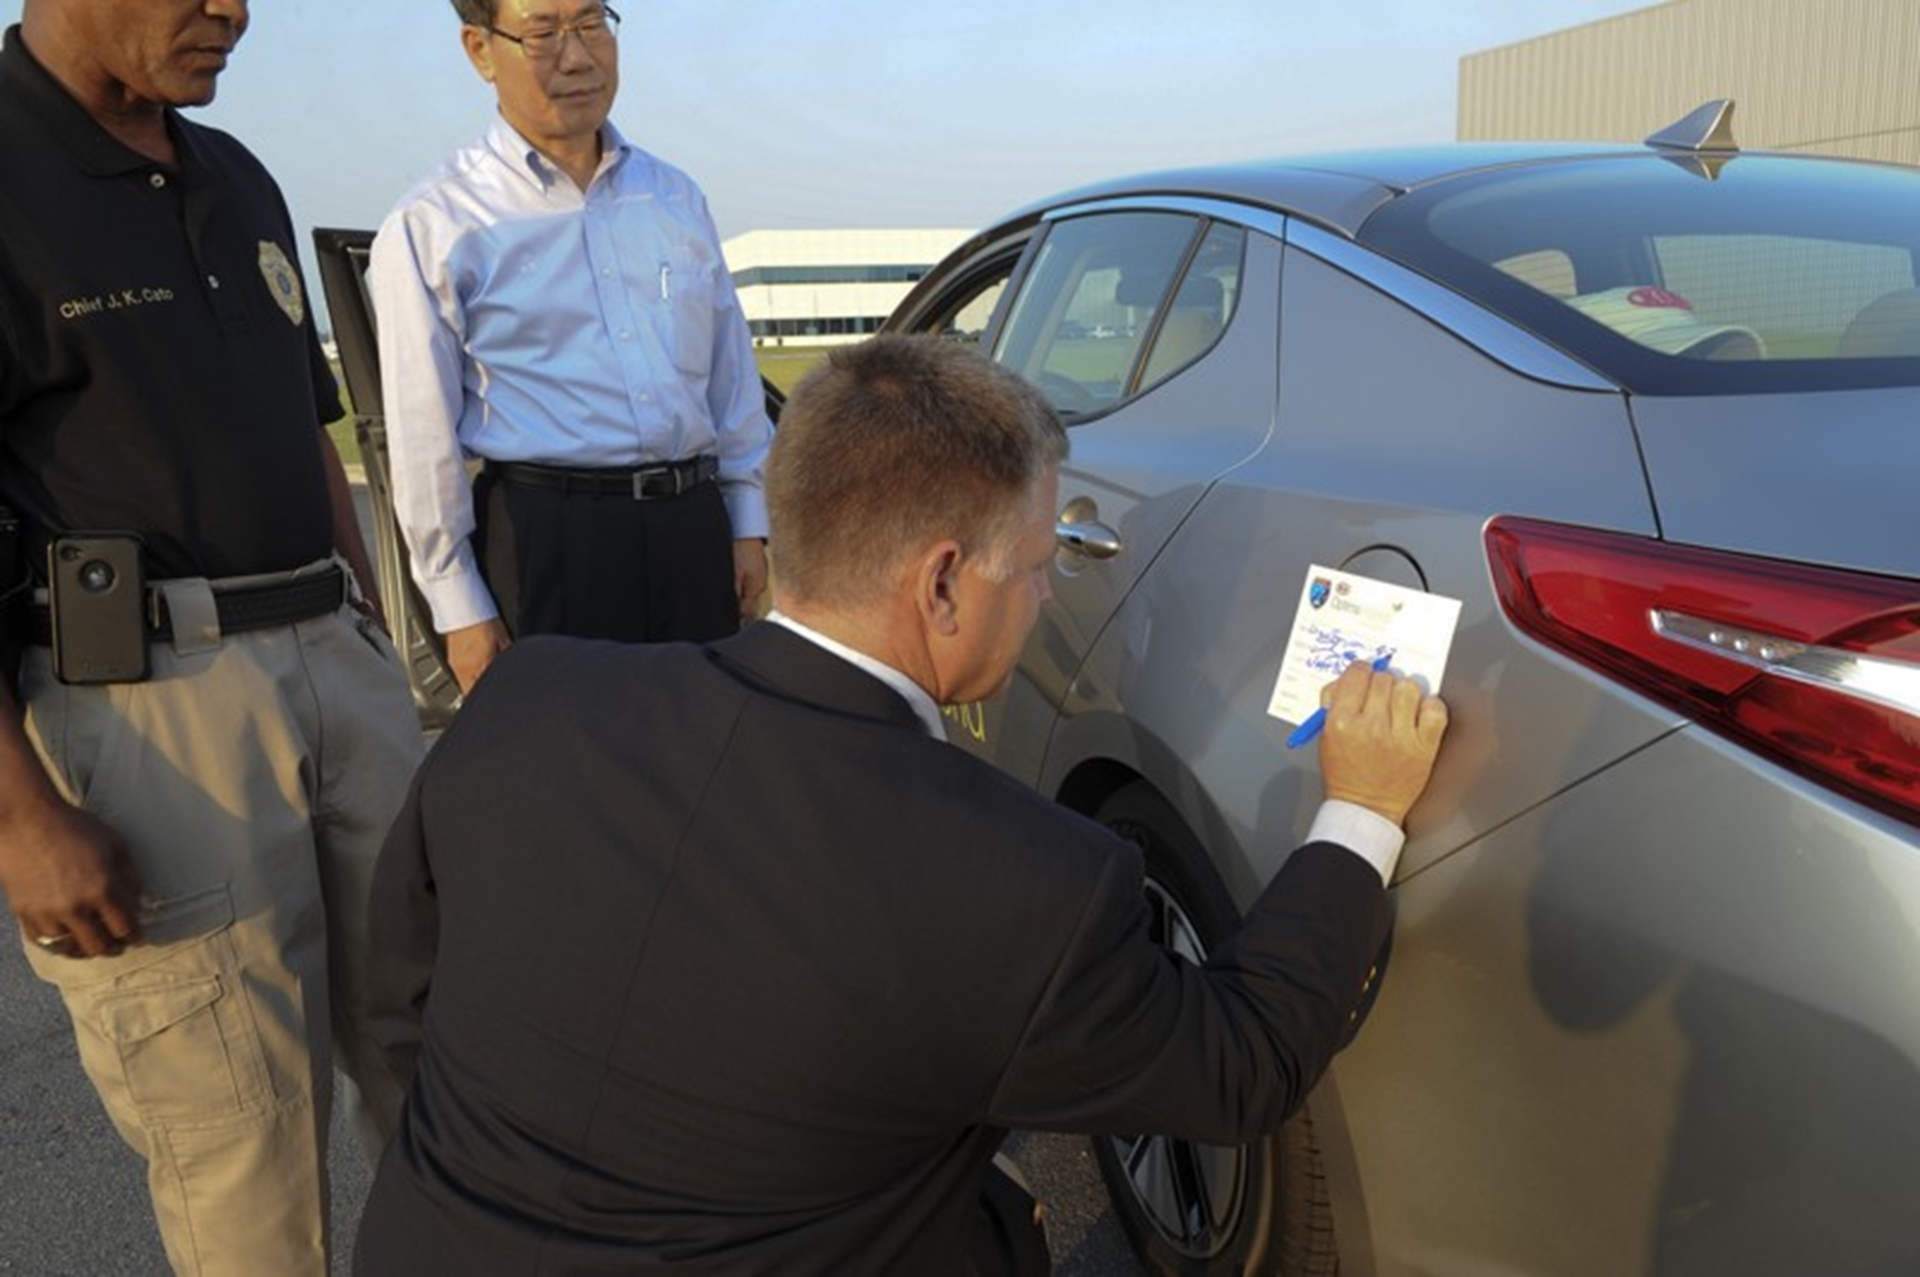 Kia Optima Hybrid sets new Guinness World Record for fuel economy